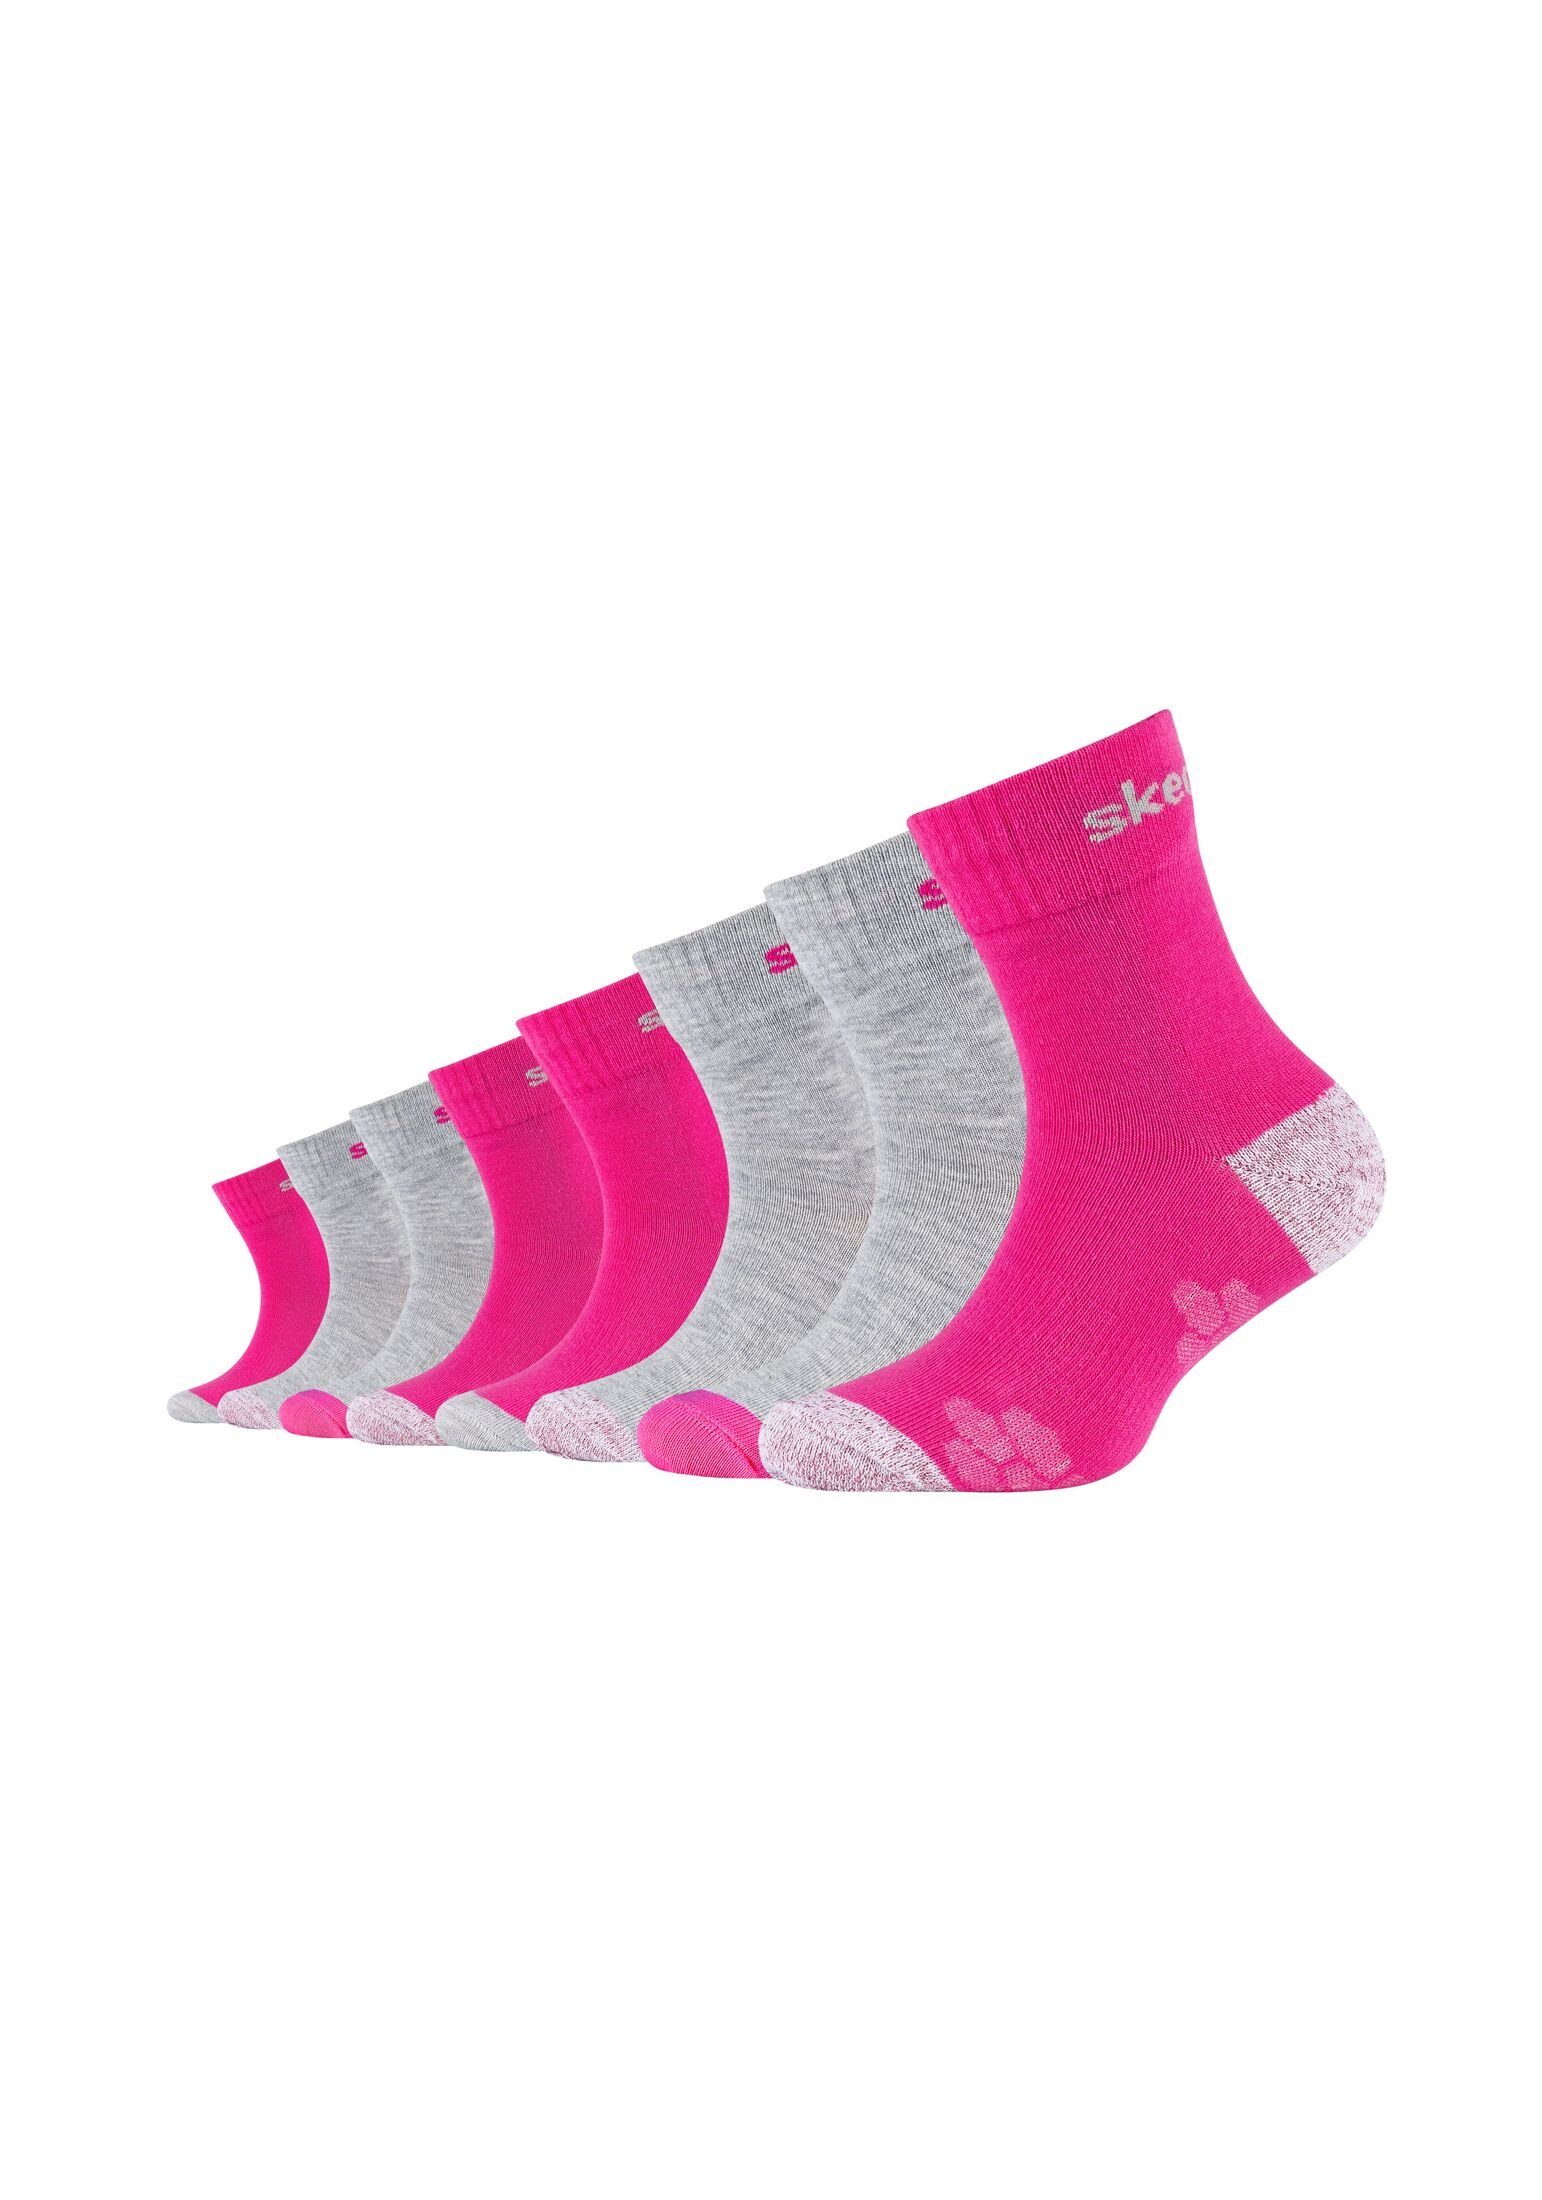 Skechers Socken Socken 8er mix shocking Pack pink